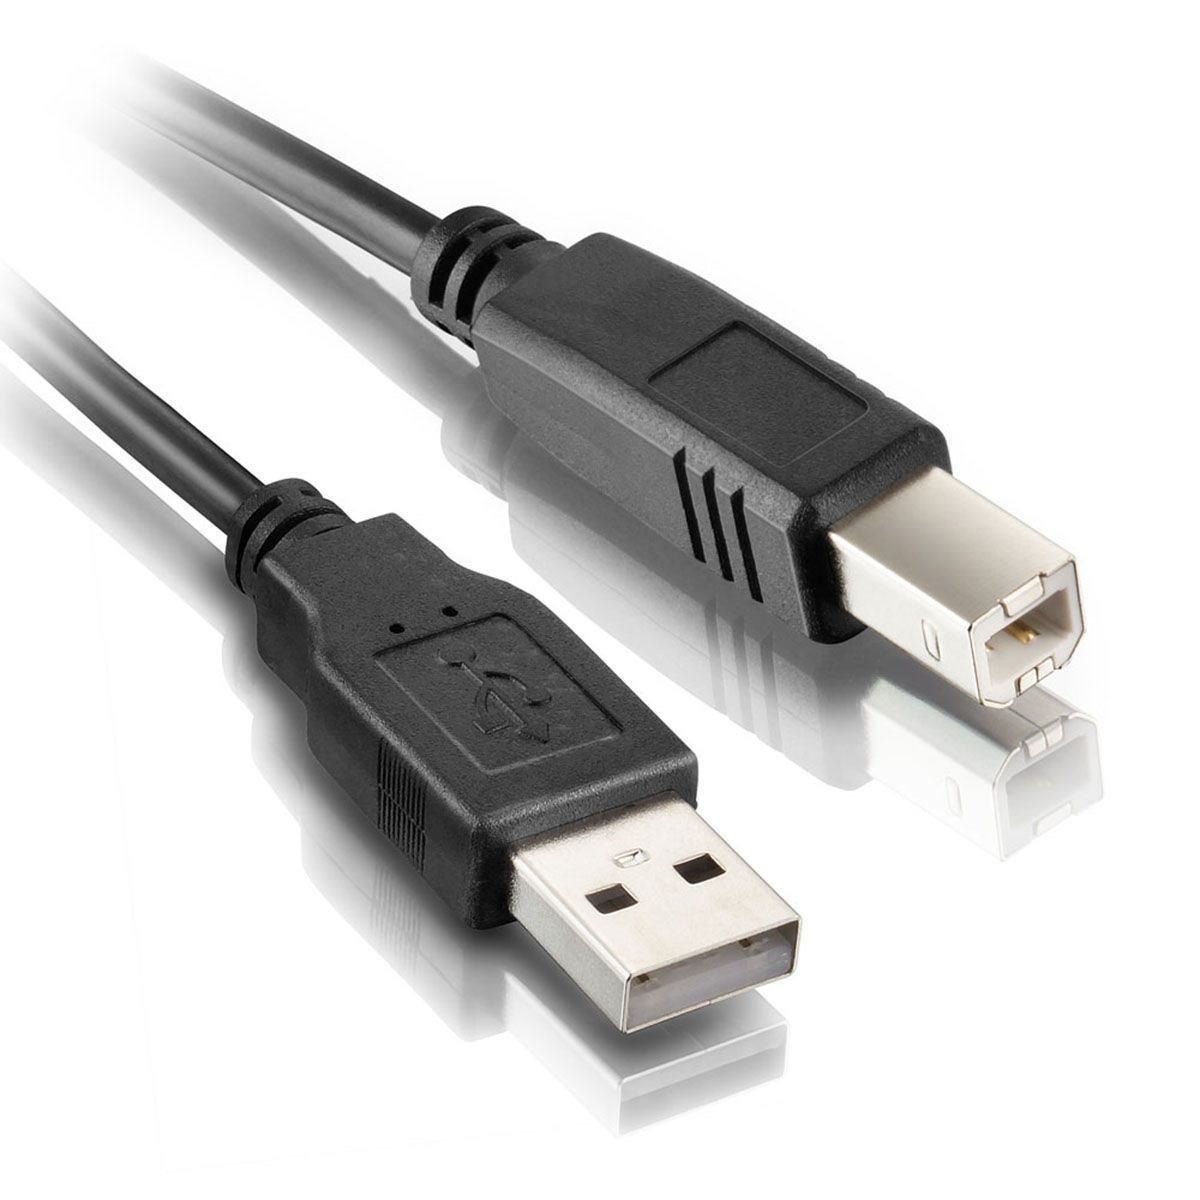 CABO USB 2.0 PARA IMPRESSORA AM/BM C/ FILTRO 02 METROS EXBOM / EMPIRE/LOTUS